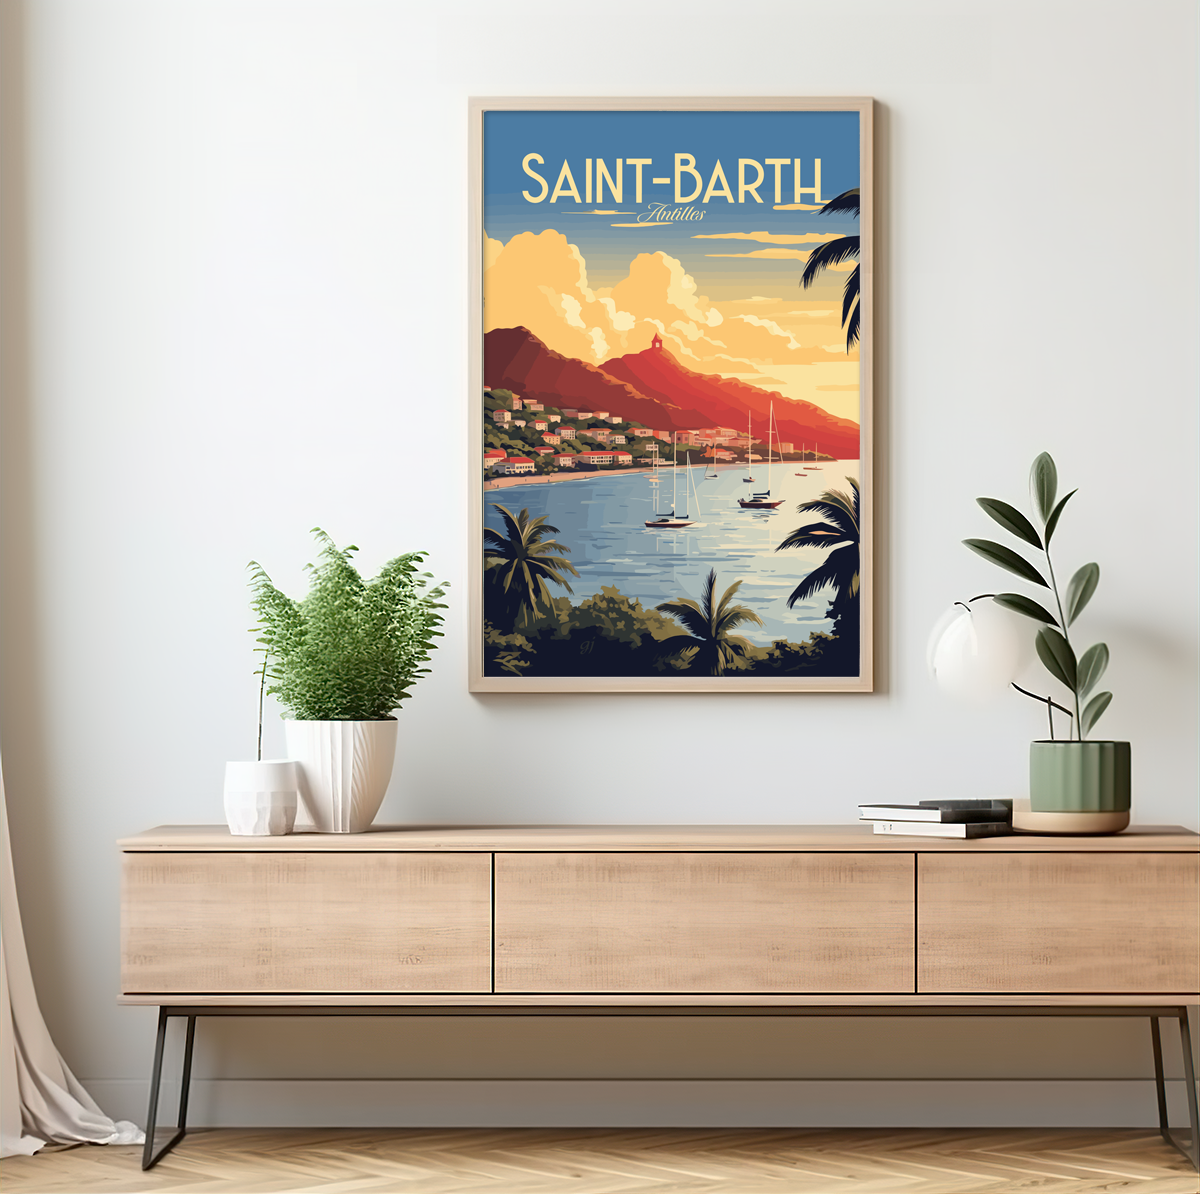 Saint Barth poster by bon voyage design